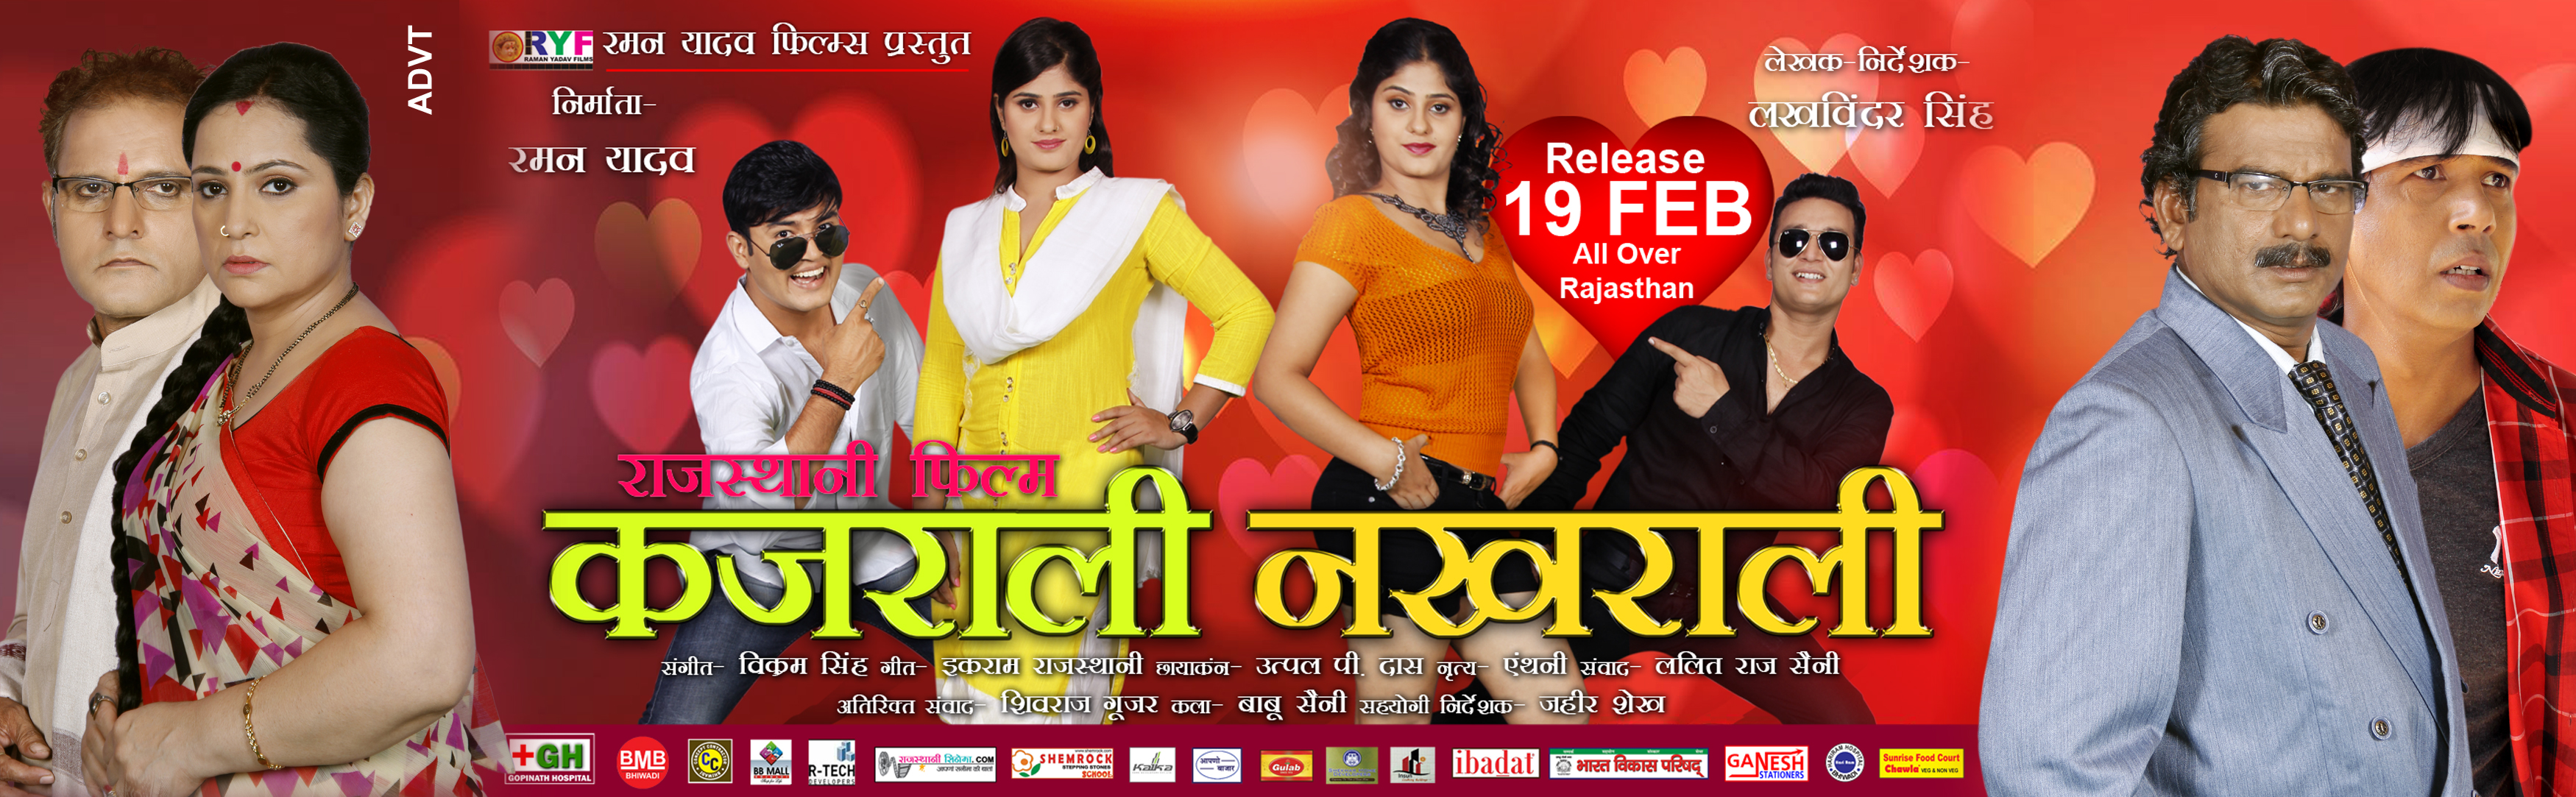 rajasthani movie kajrali nakhrali poster